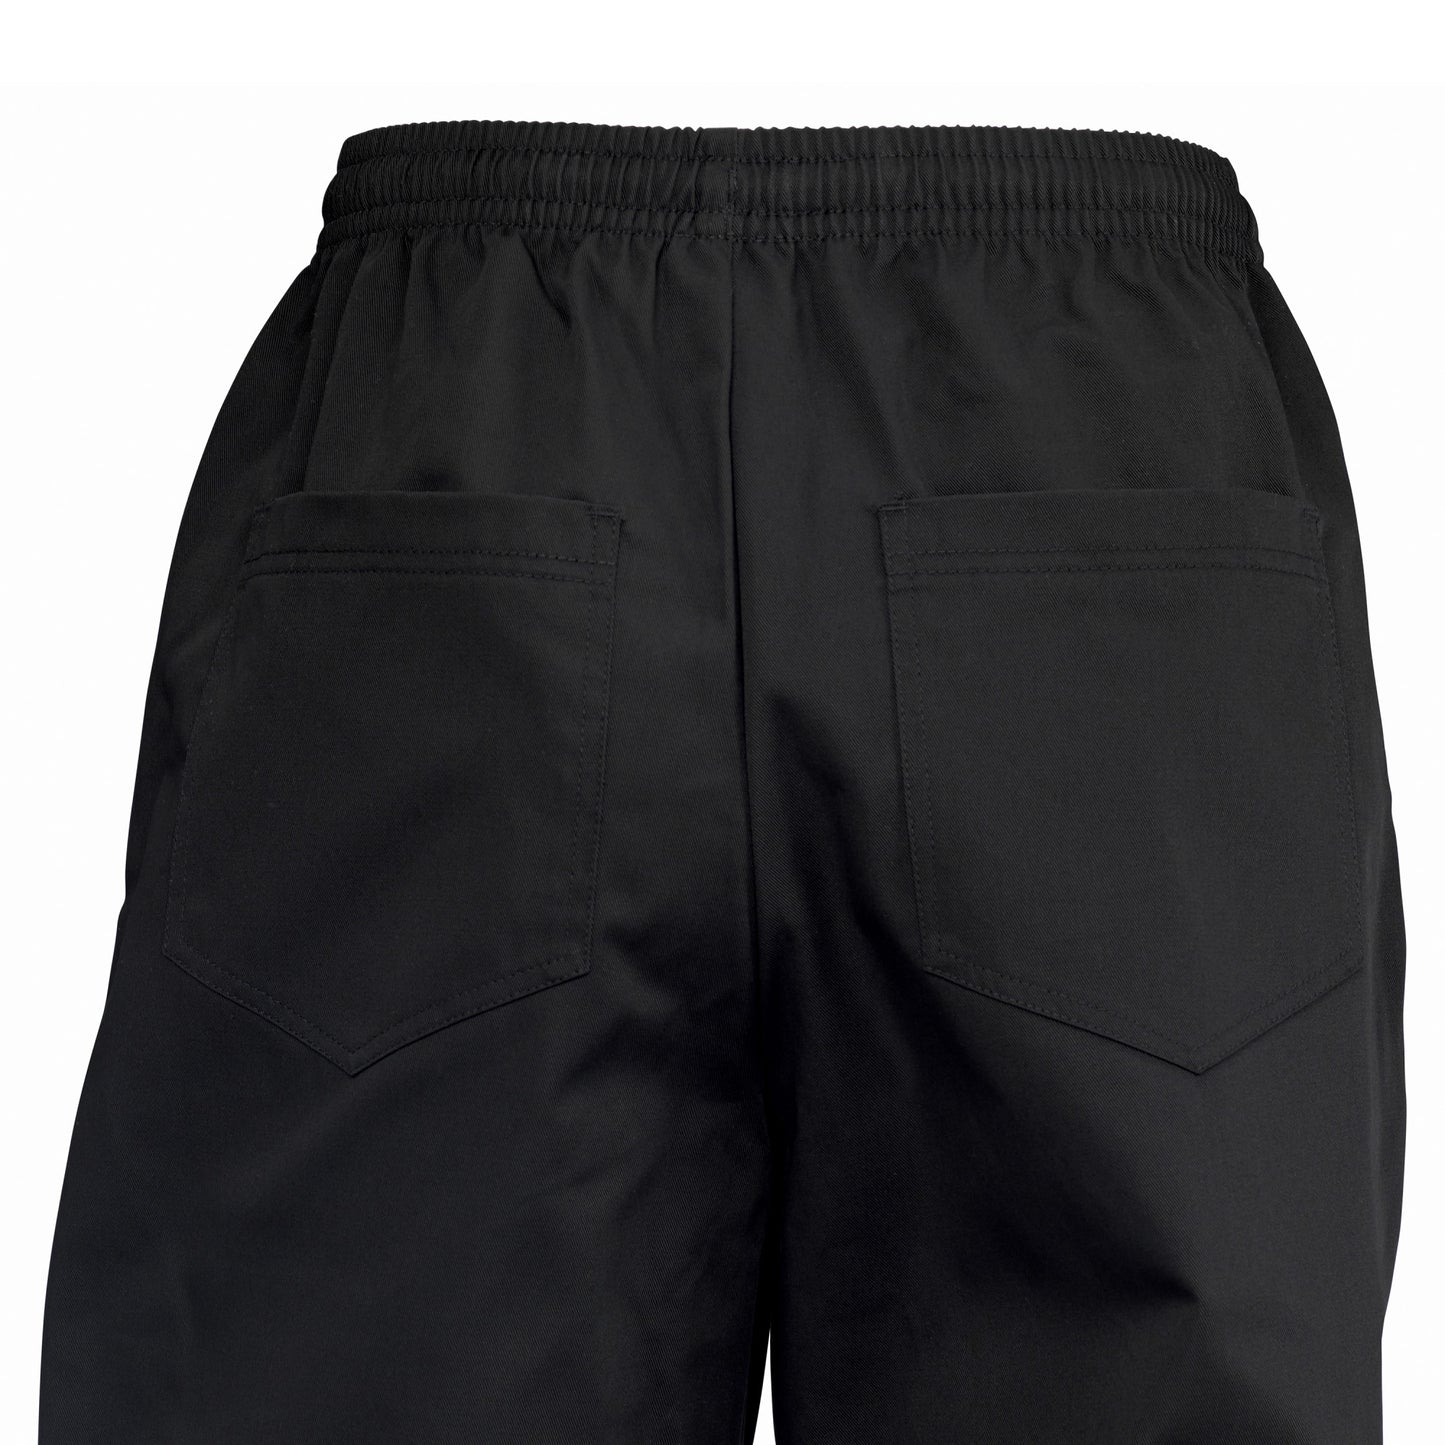 UNF-2KS - Chef Pants, Black - Small